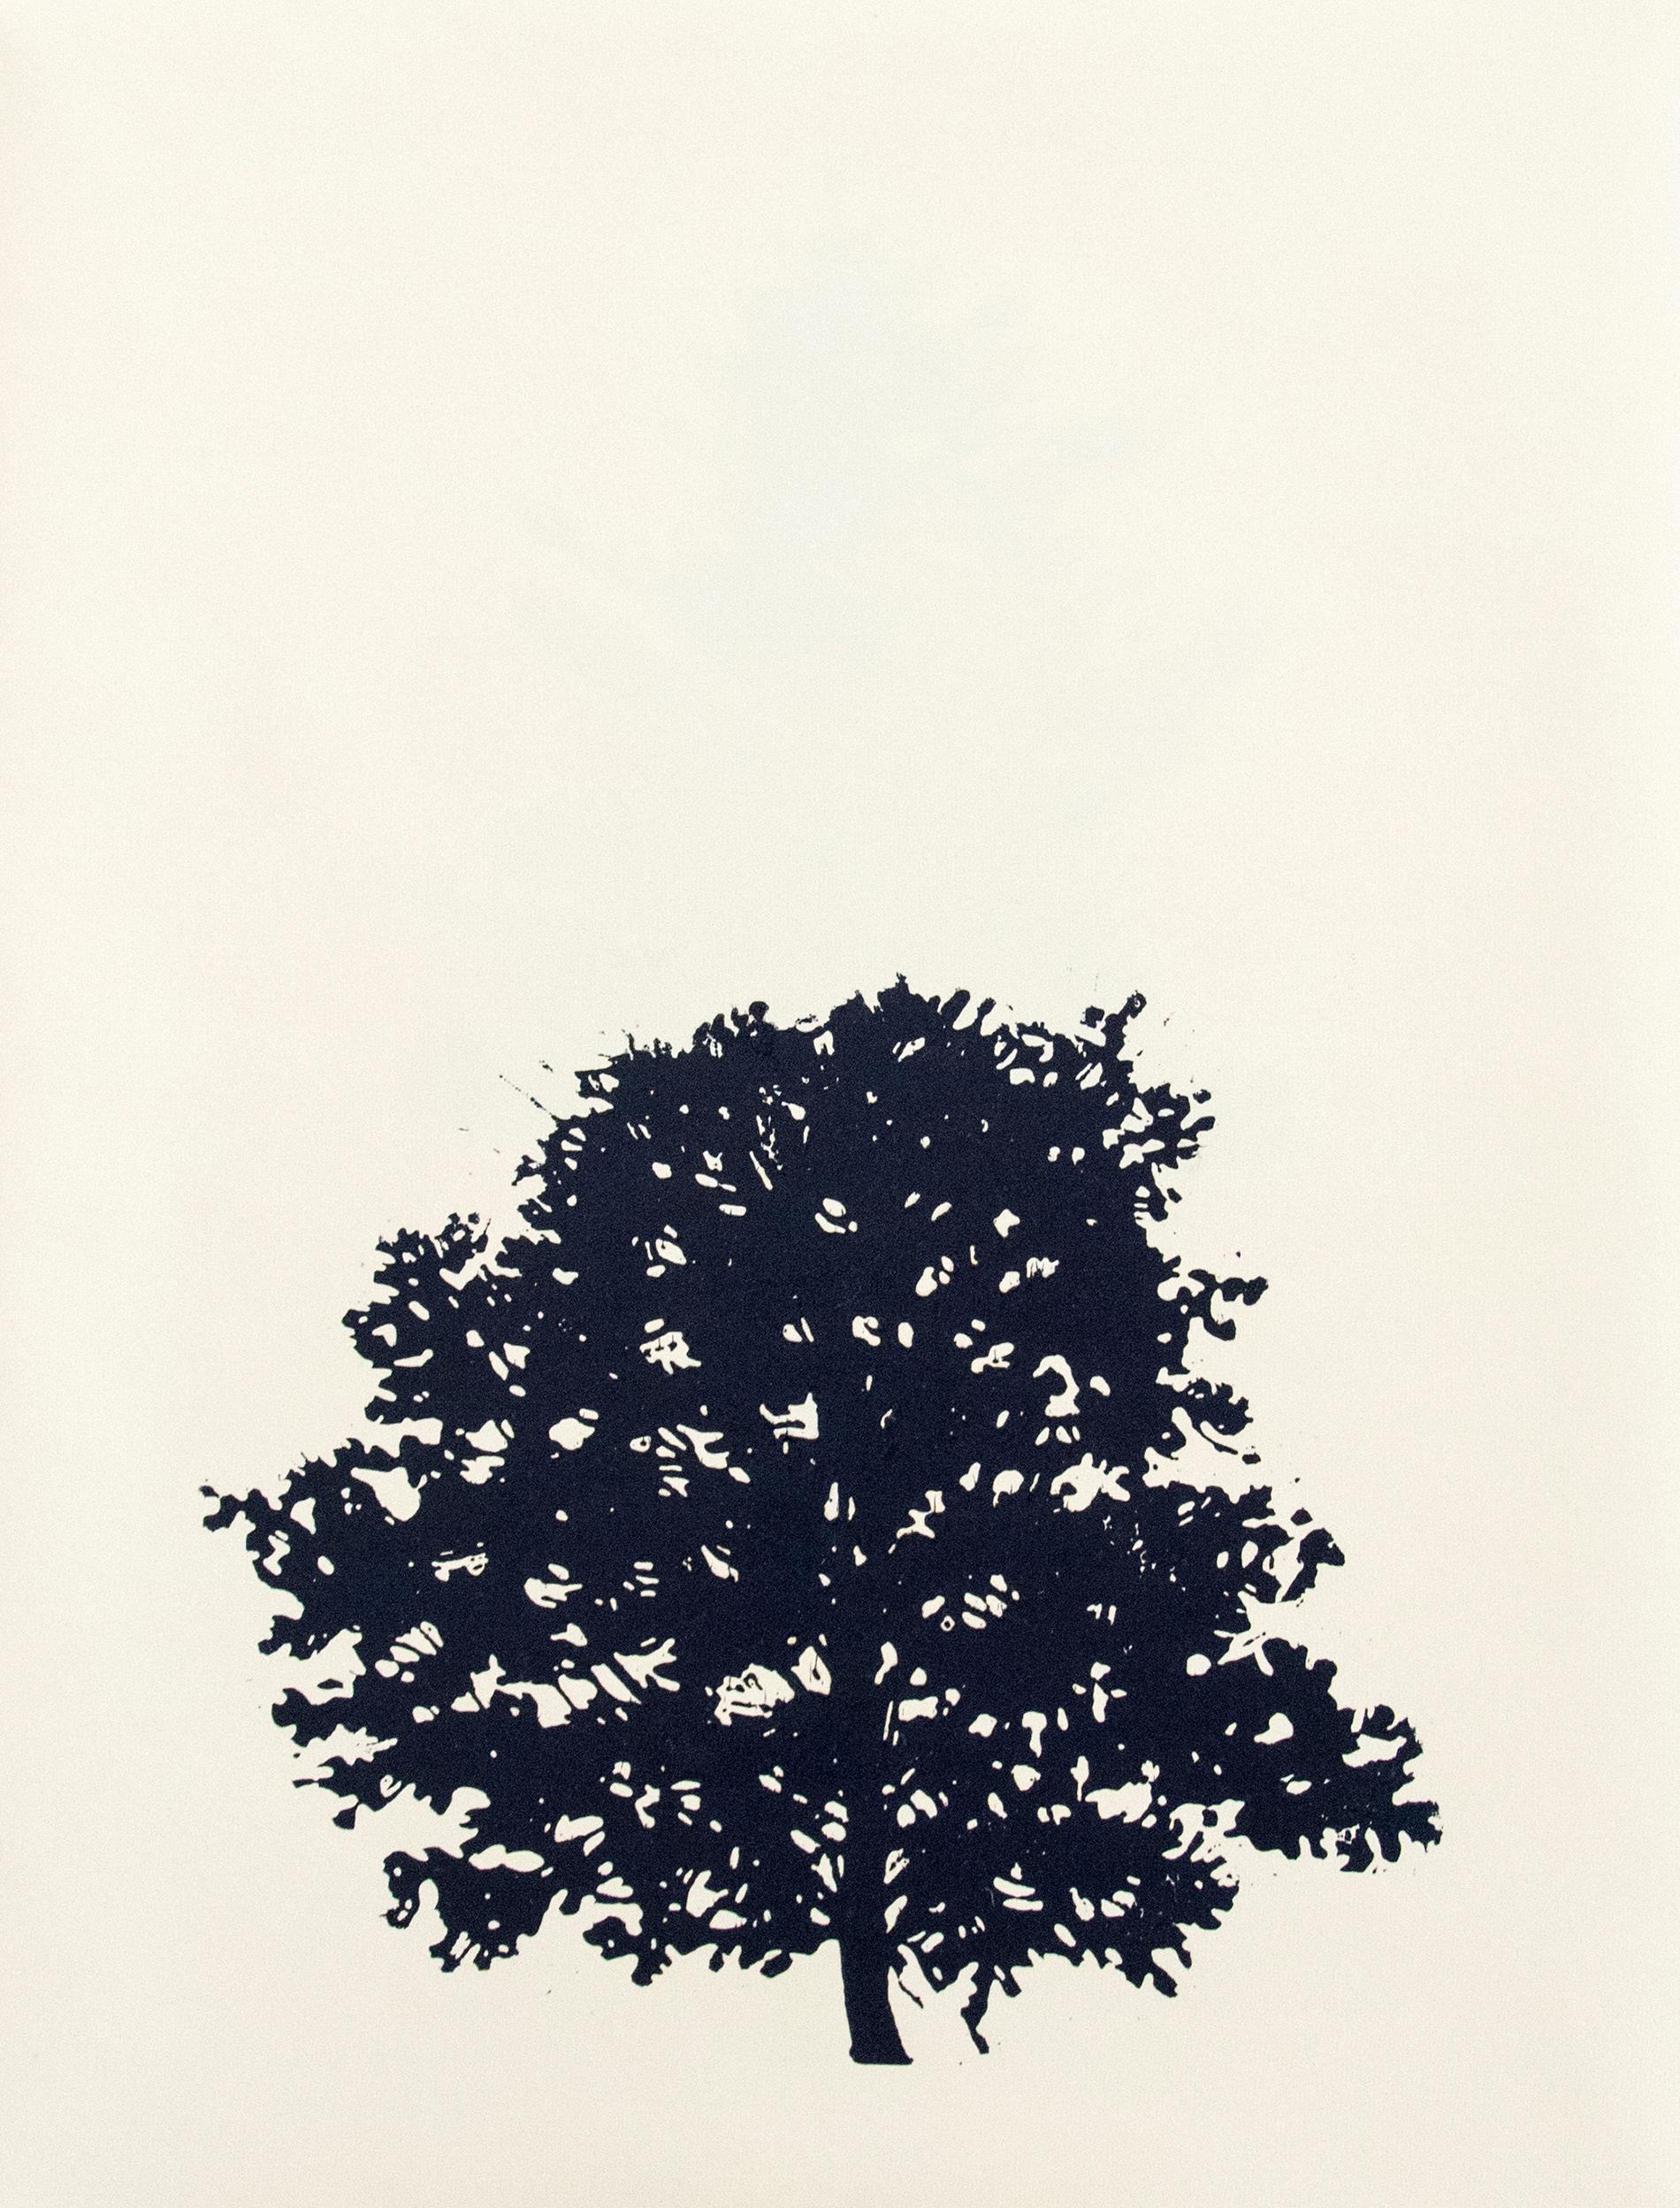 Der Wald  8/12 - portfolio of 9 woodblock prints 4